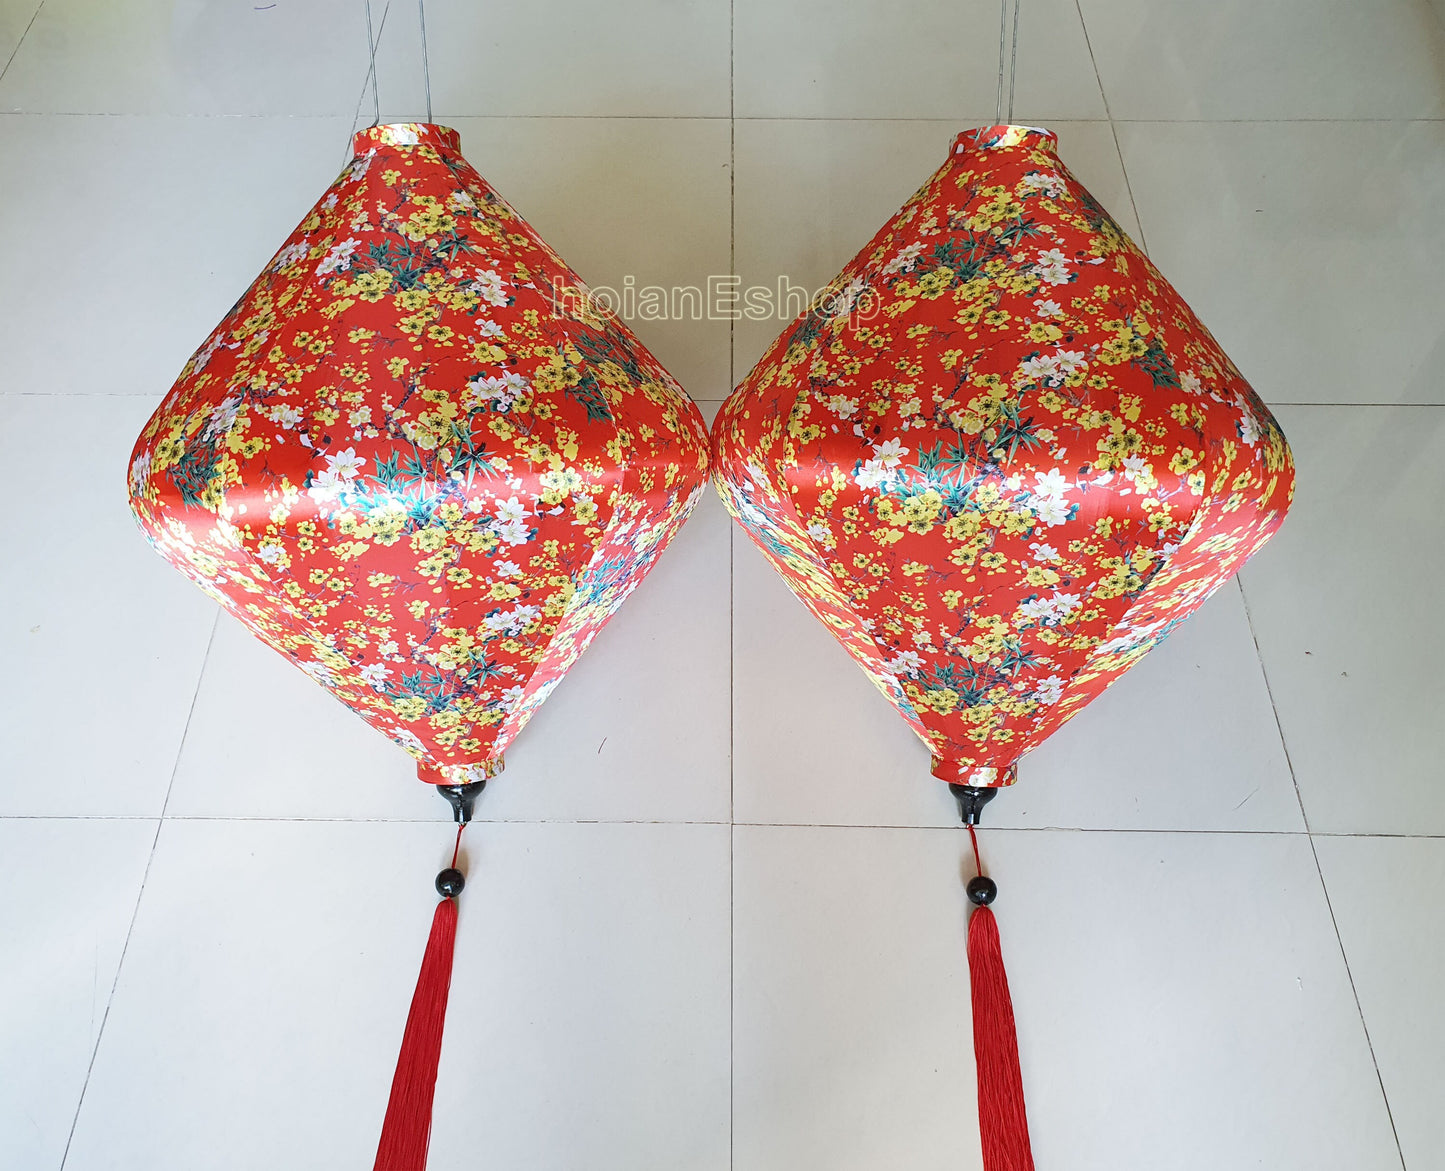 2 Big Silk Lanterns for Wedding Garden Decoration - Restaurant decor - Lunar New Year Decor - Ceiling Decoration